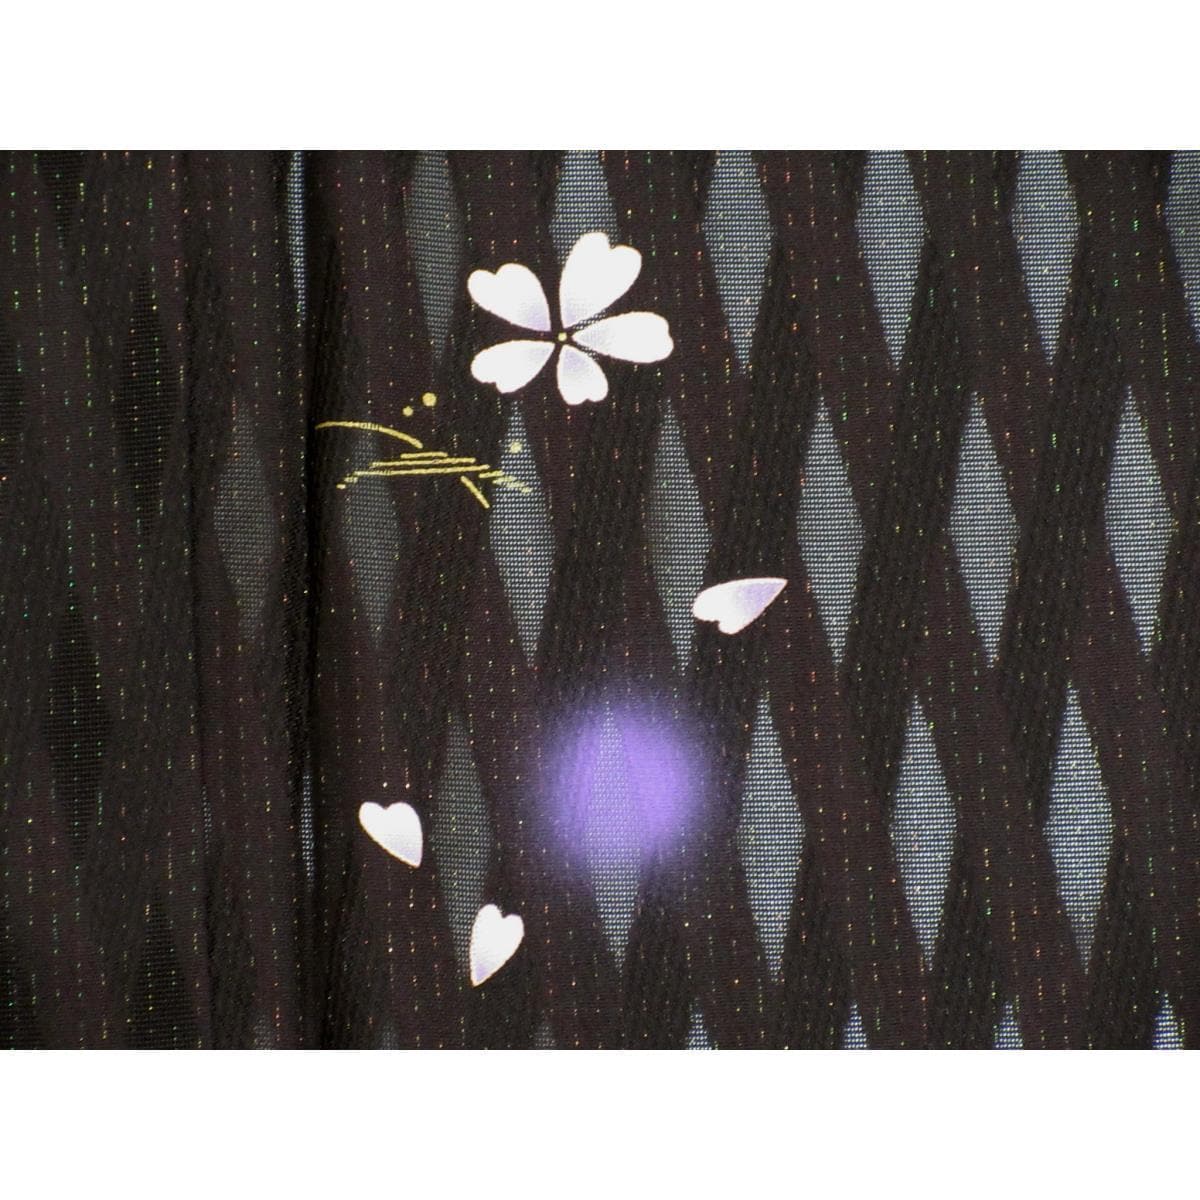 [Unused items] Single coat, Saori pattern, small pattern, Yuzen gold painting